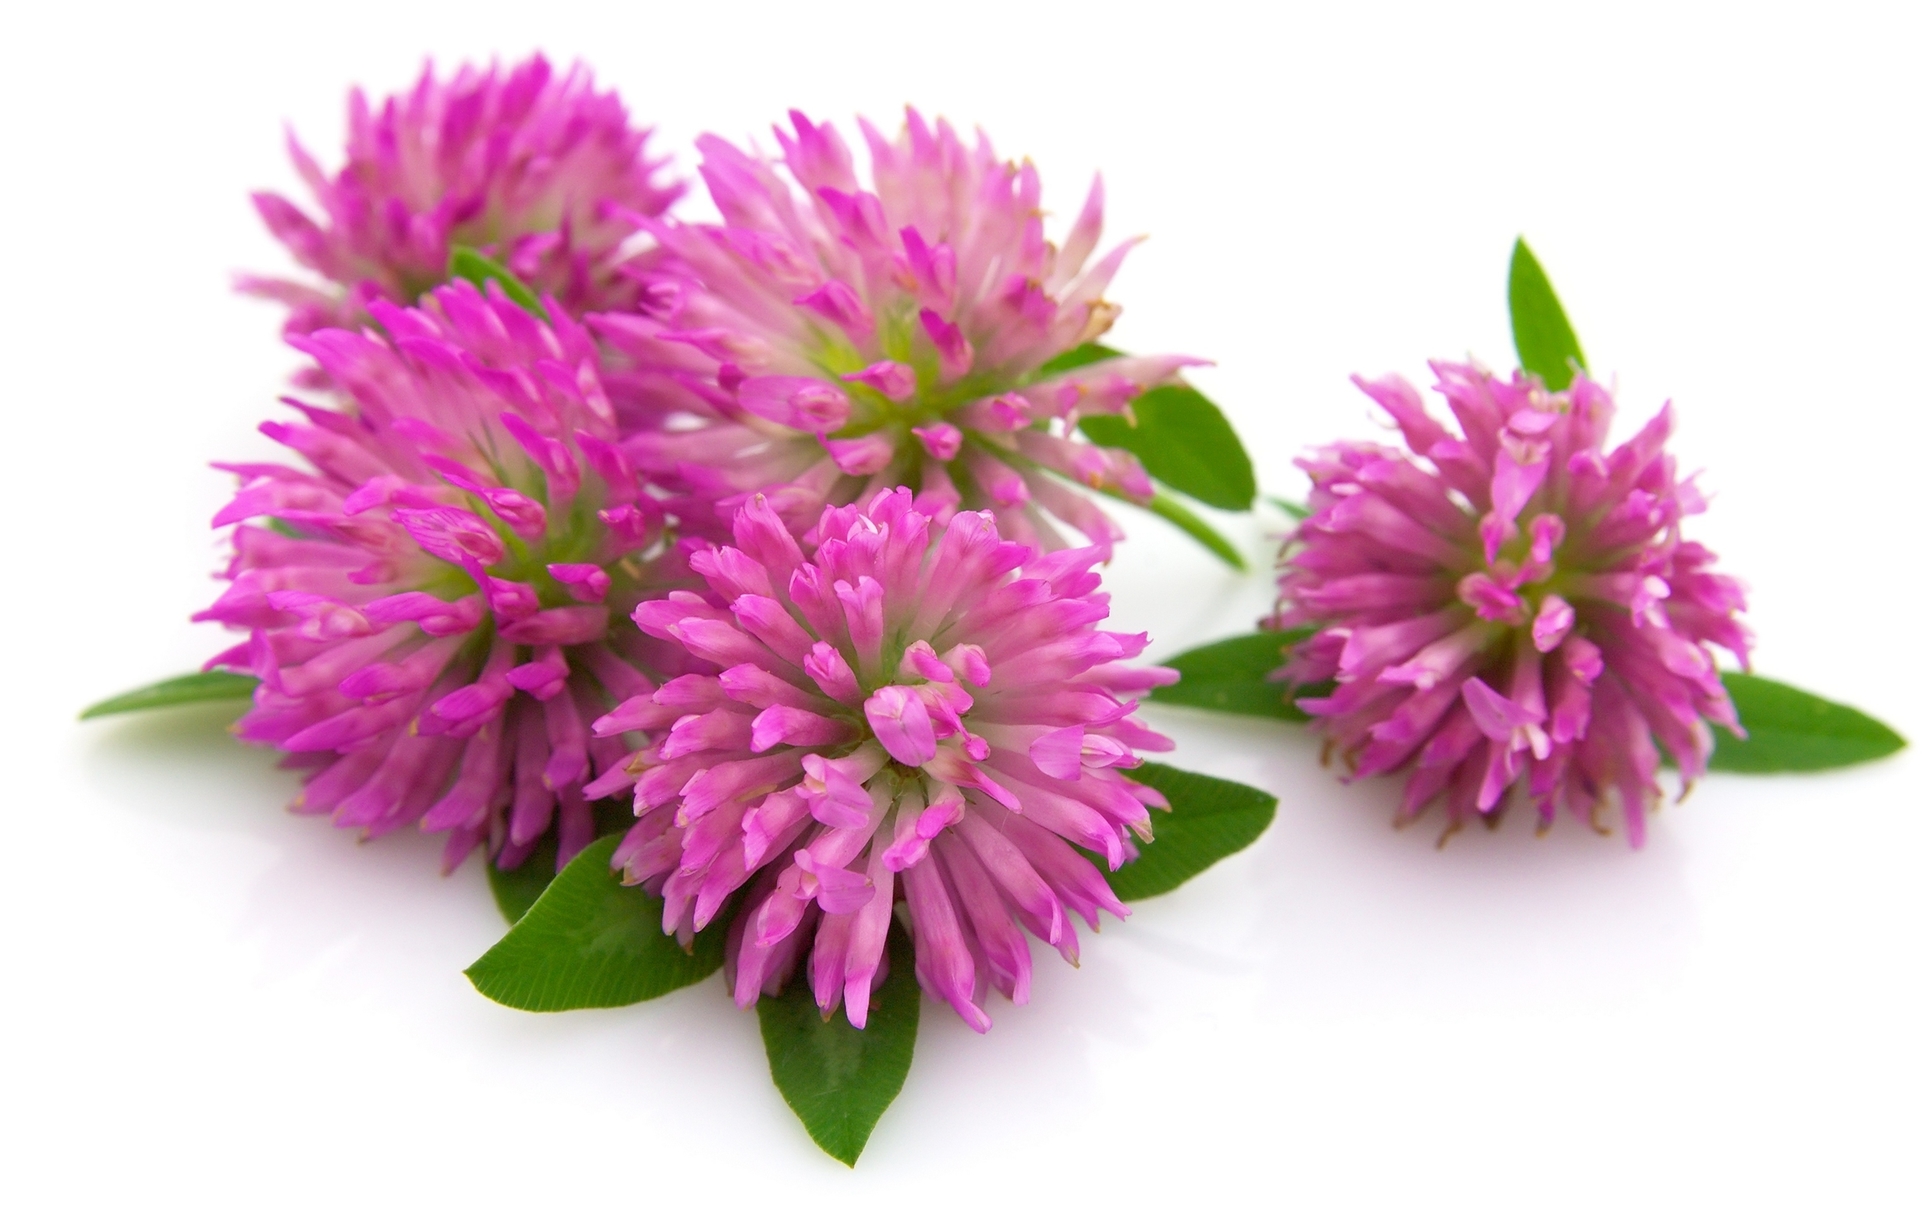 Flores Trifolium - Clover flowers - Fleurs de trèfle - Lule tërfili - Bidaj